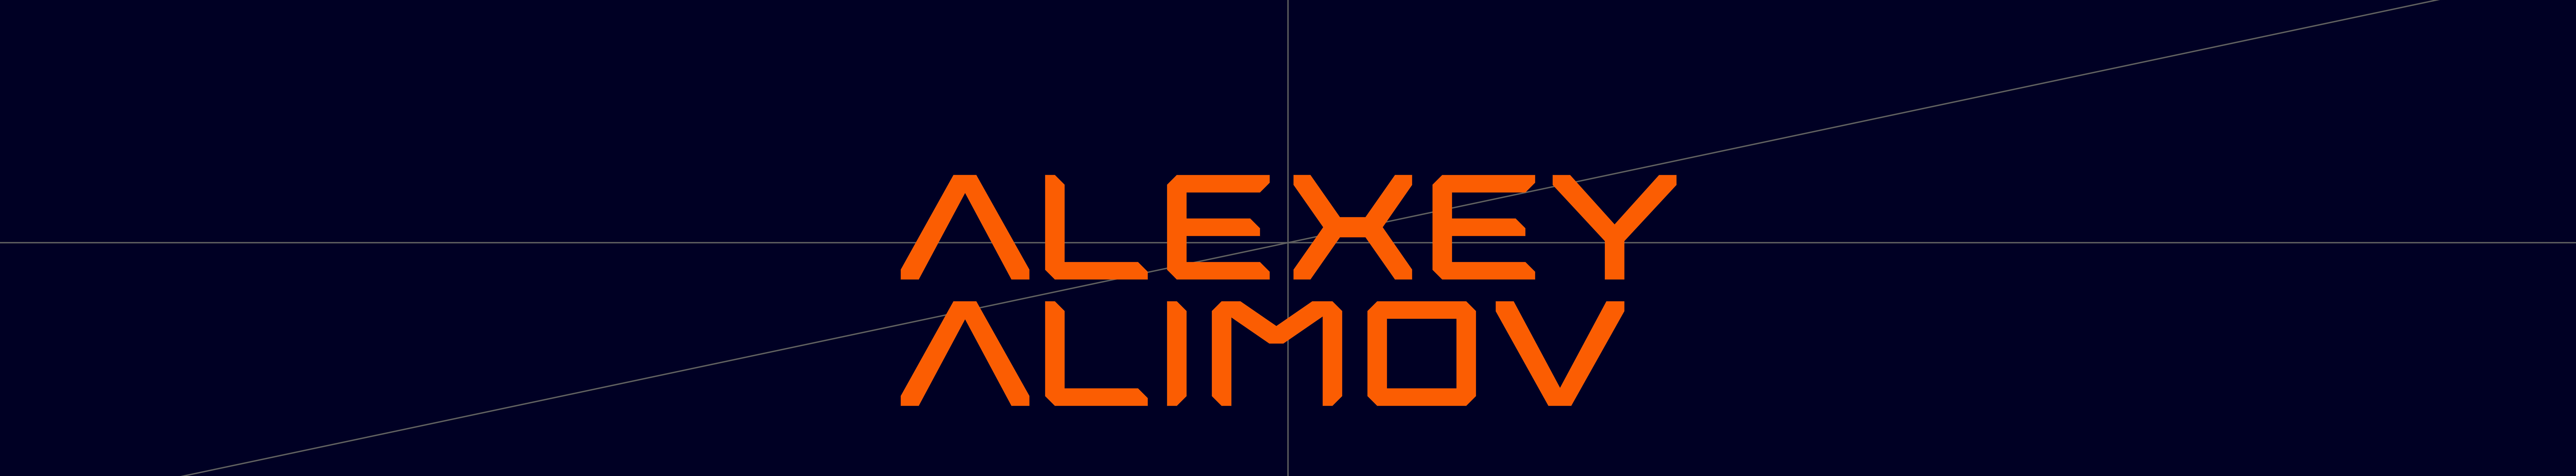 Alexey Alimov's profile banner